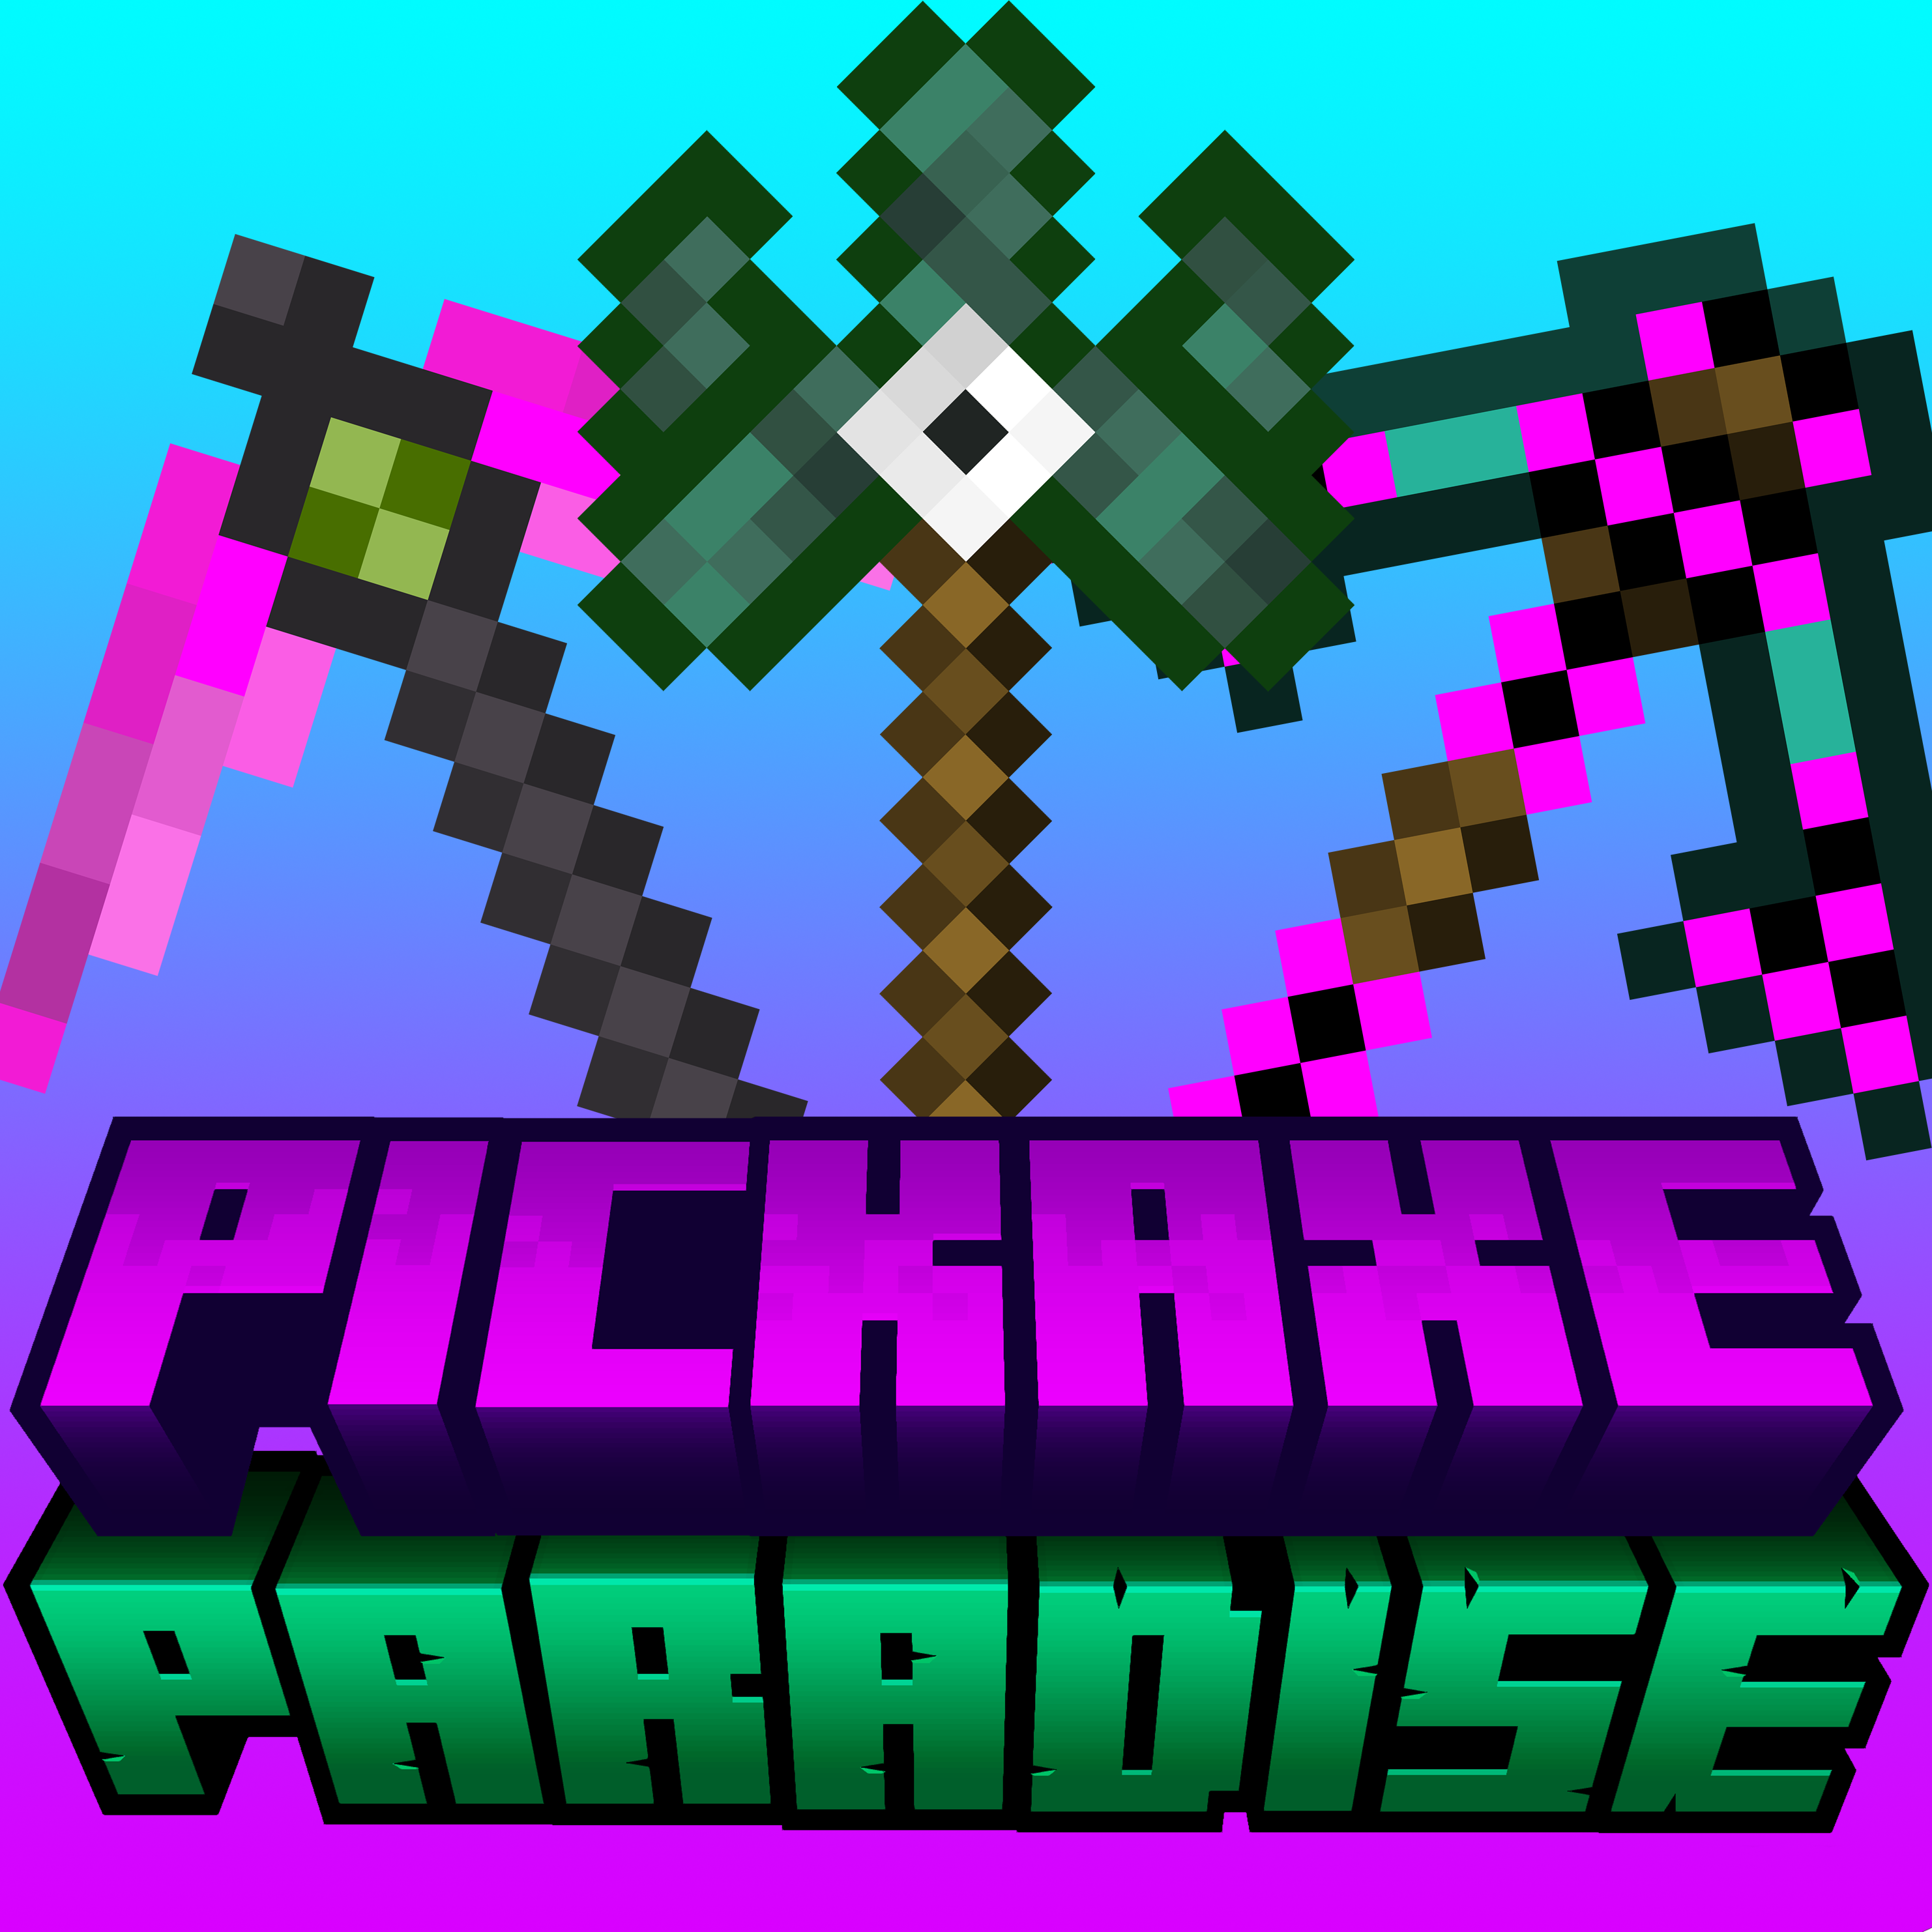 Kaiju Paradise - Minecraft Mods - CurseForge